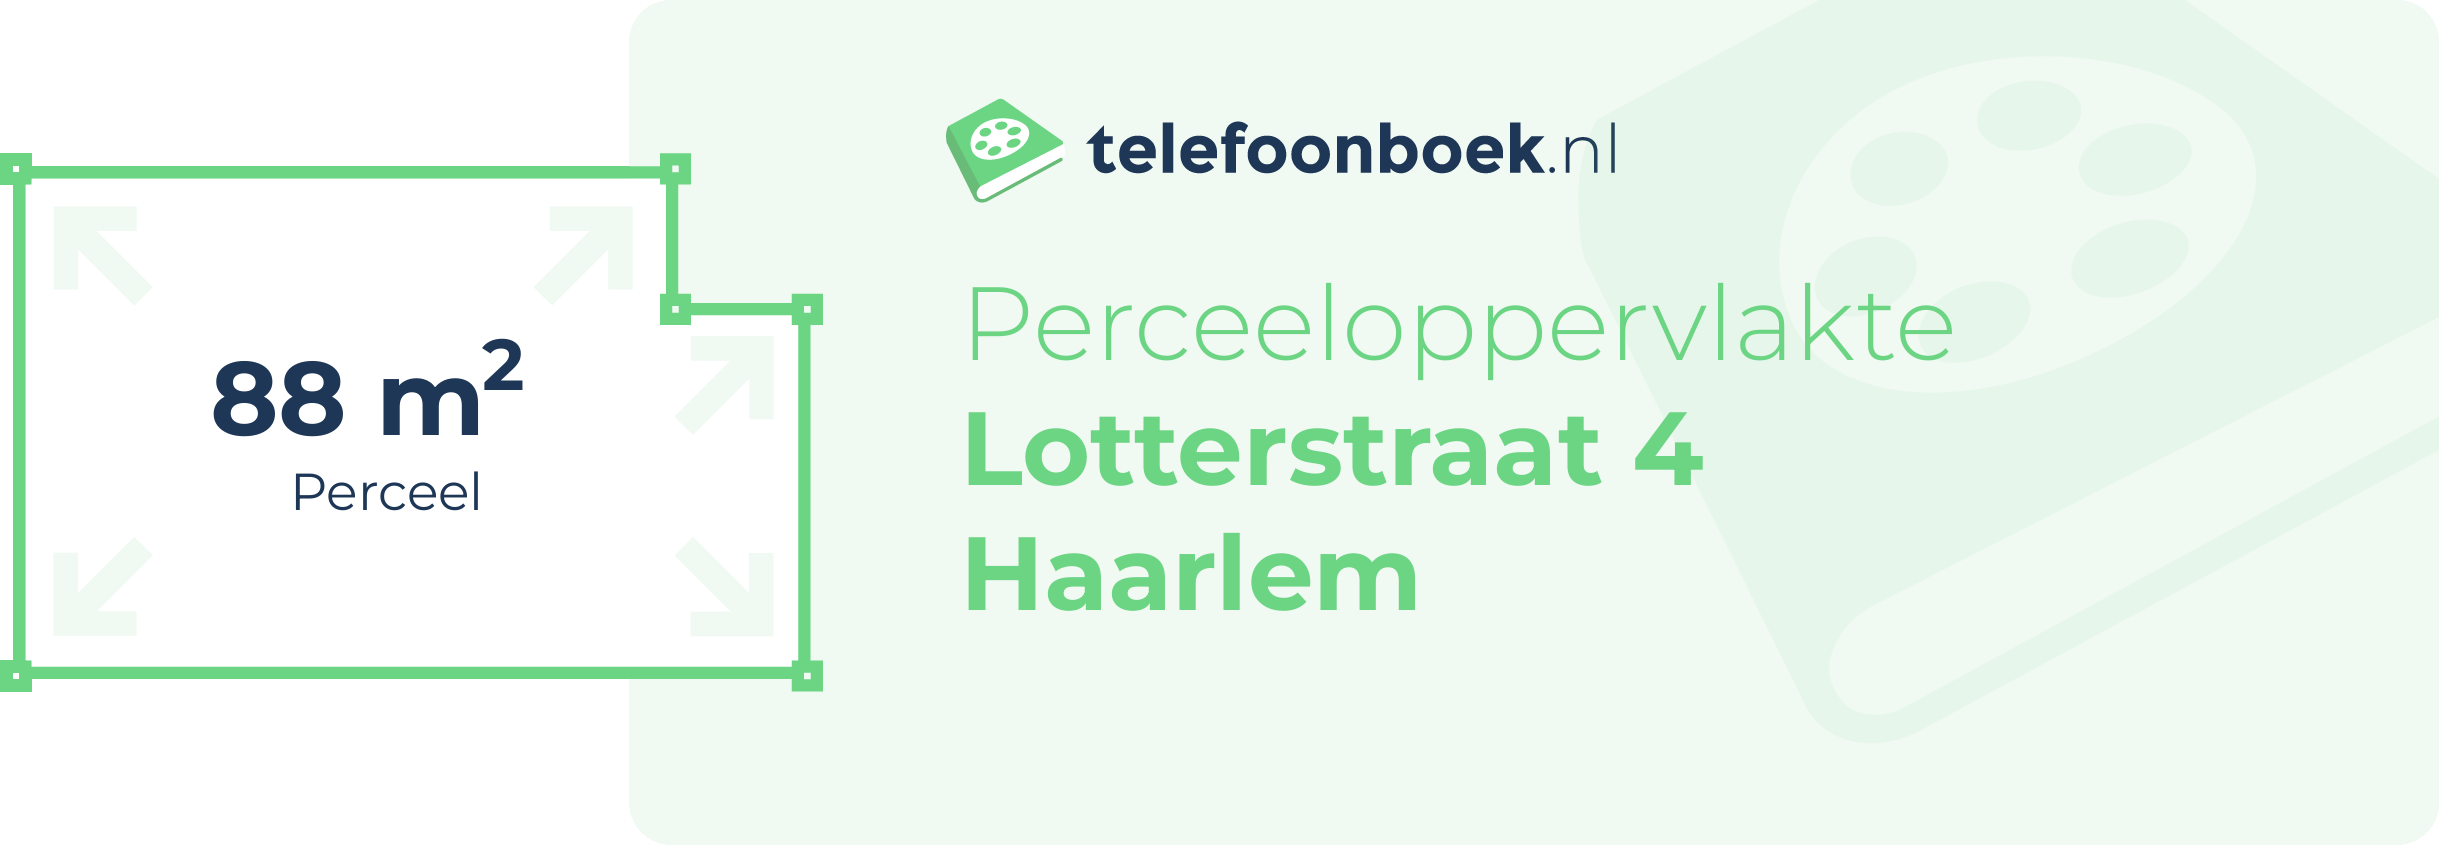 Perceeloppervlakte Lotterstraat 4 Haarlem